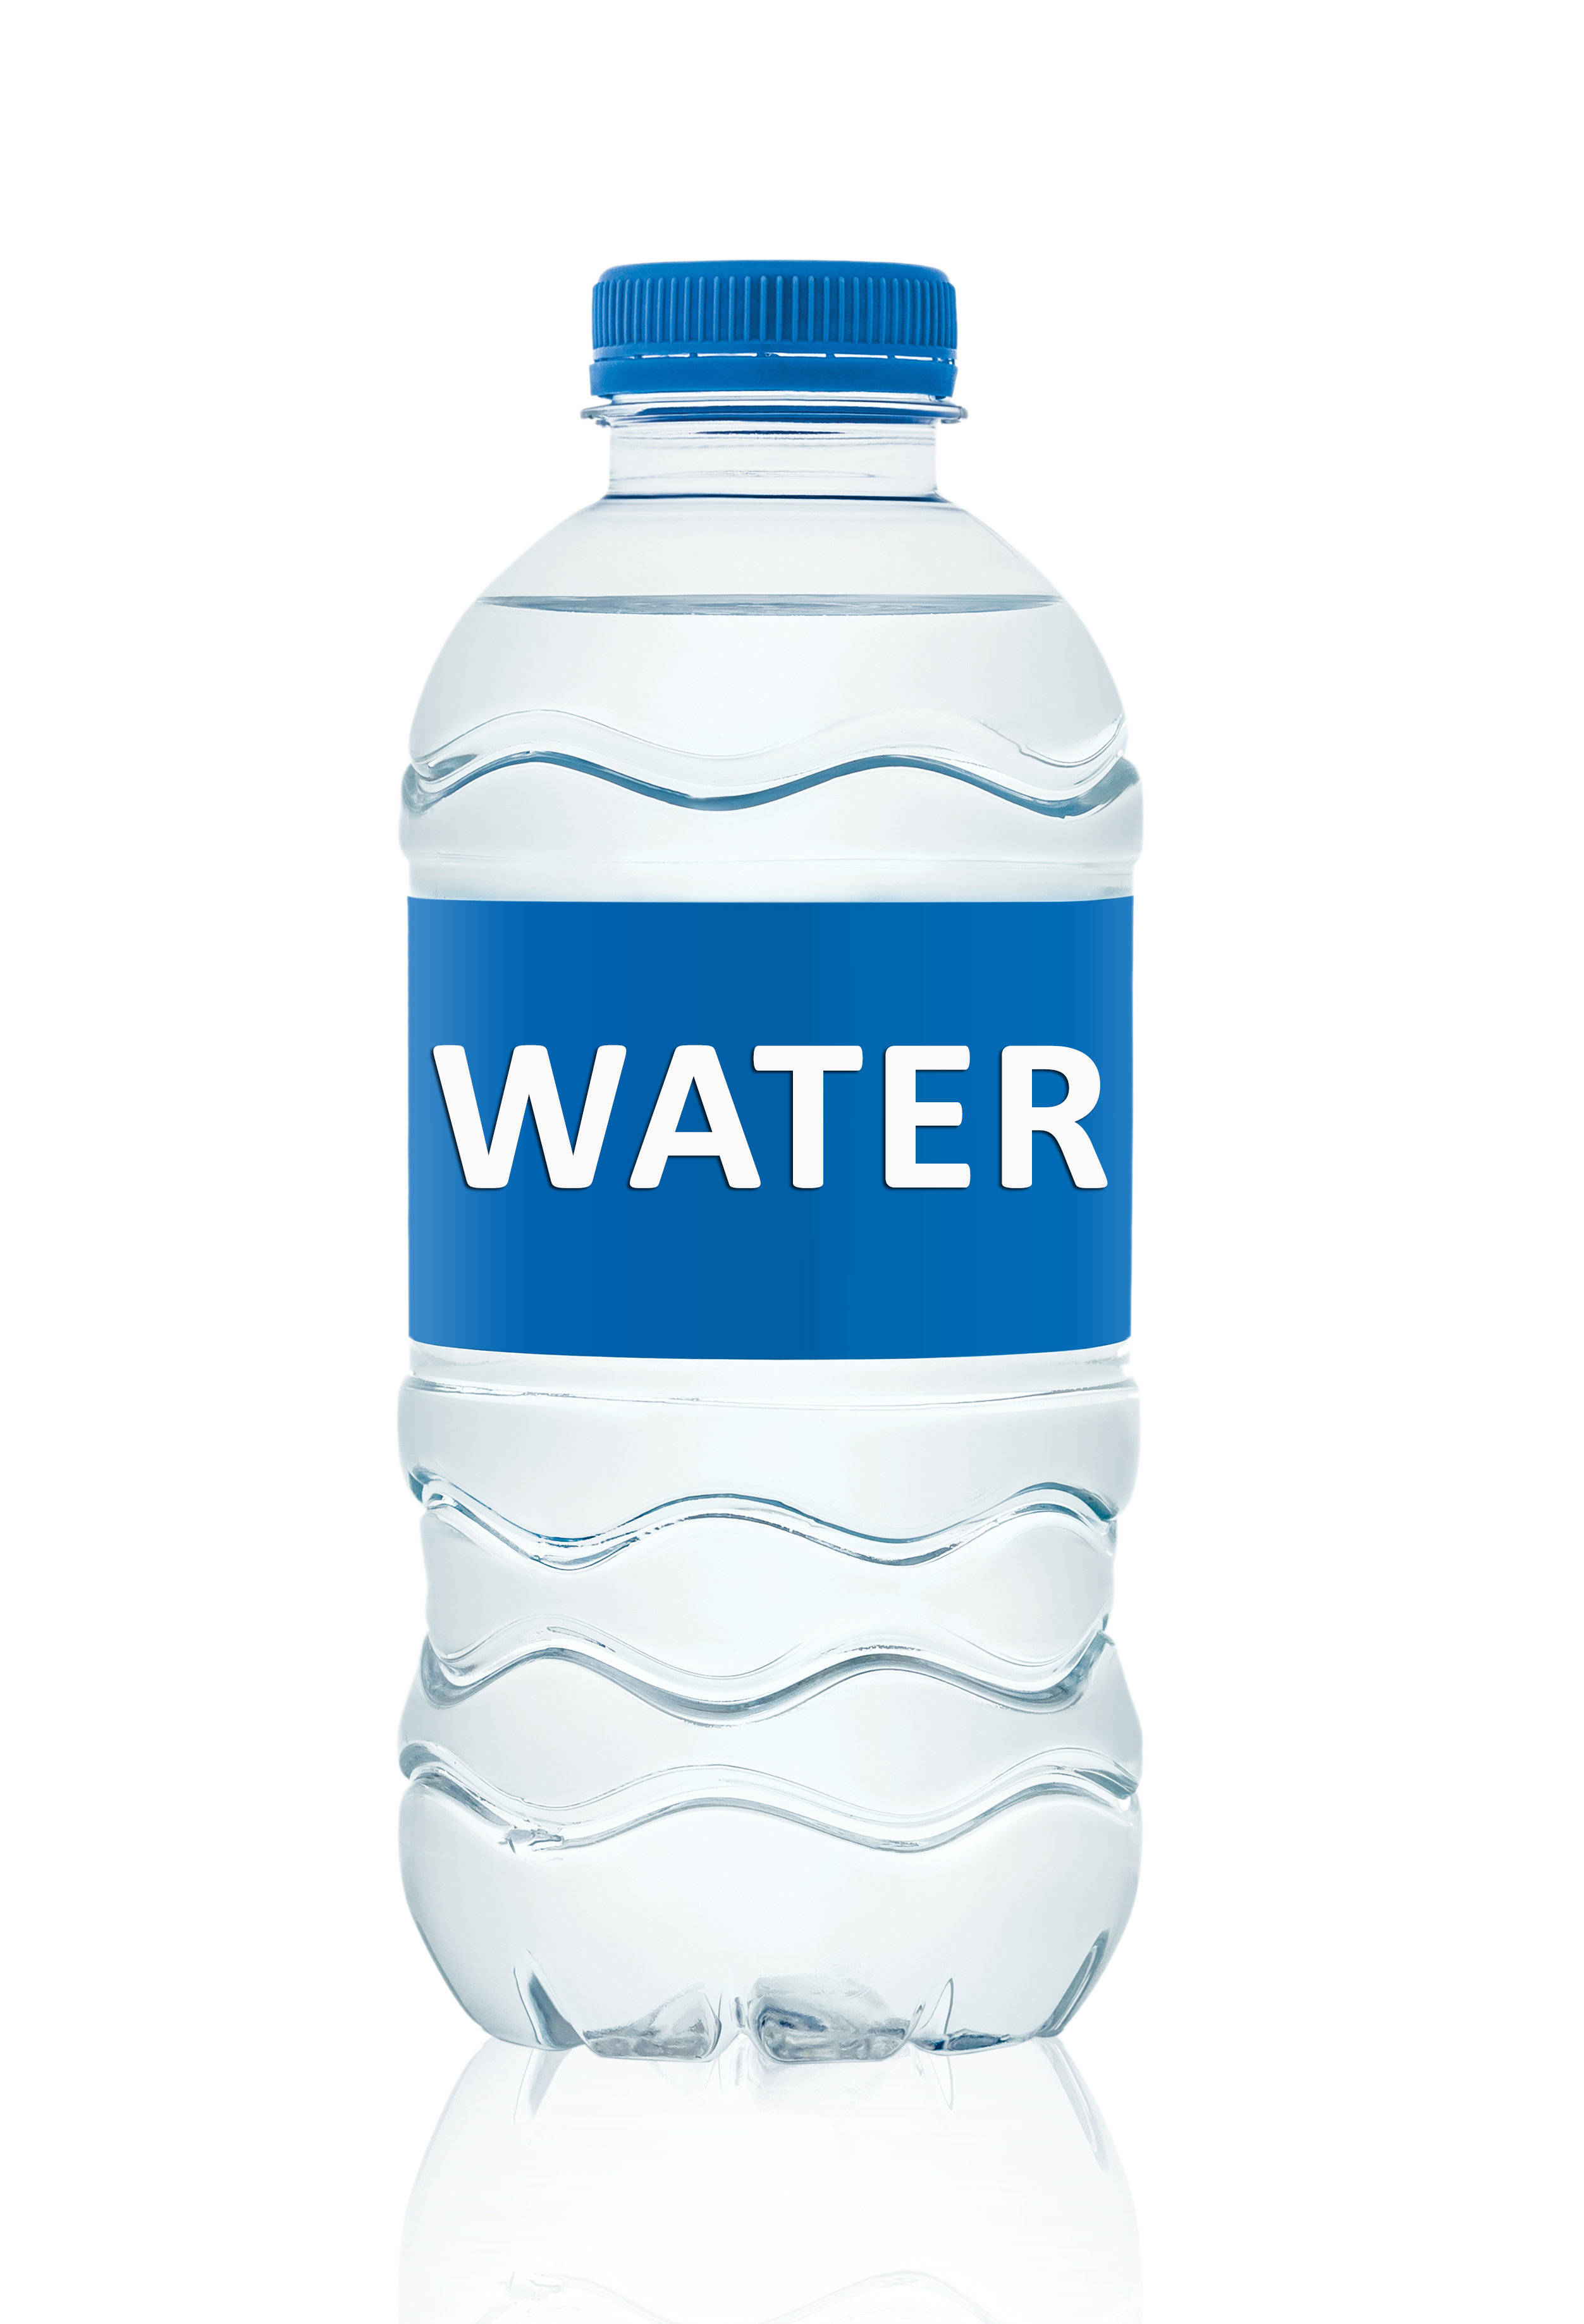 Water Bottle PNG Image in Transparent pngteam.com